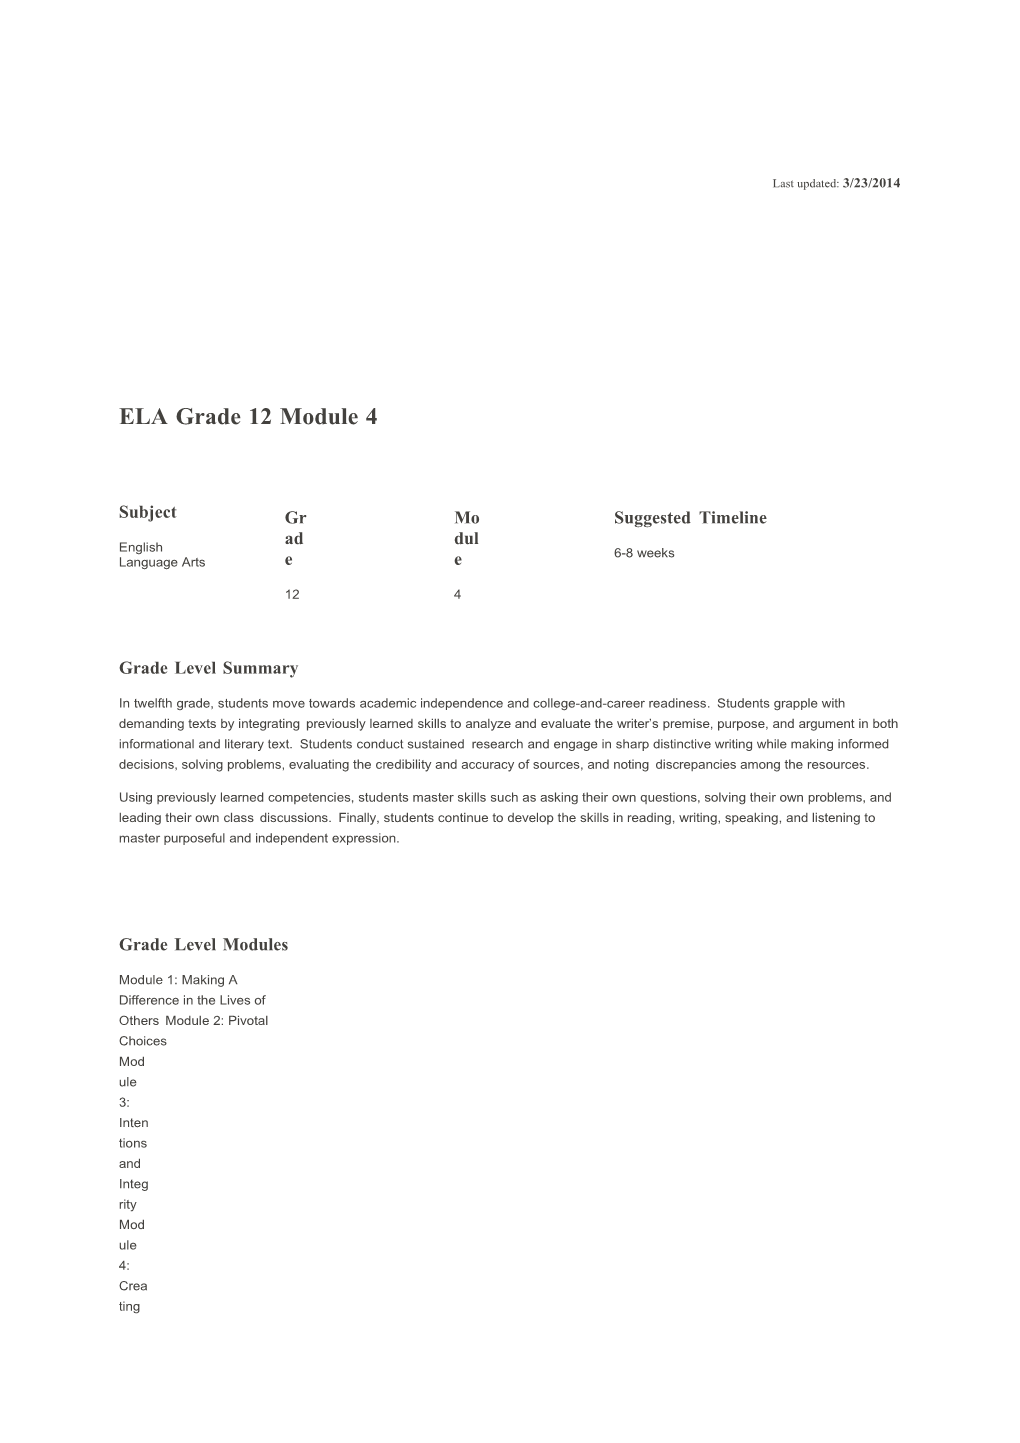 ELA Grade 12 Module 4